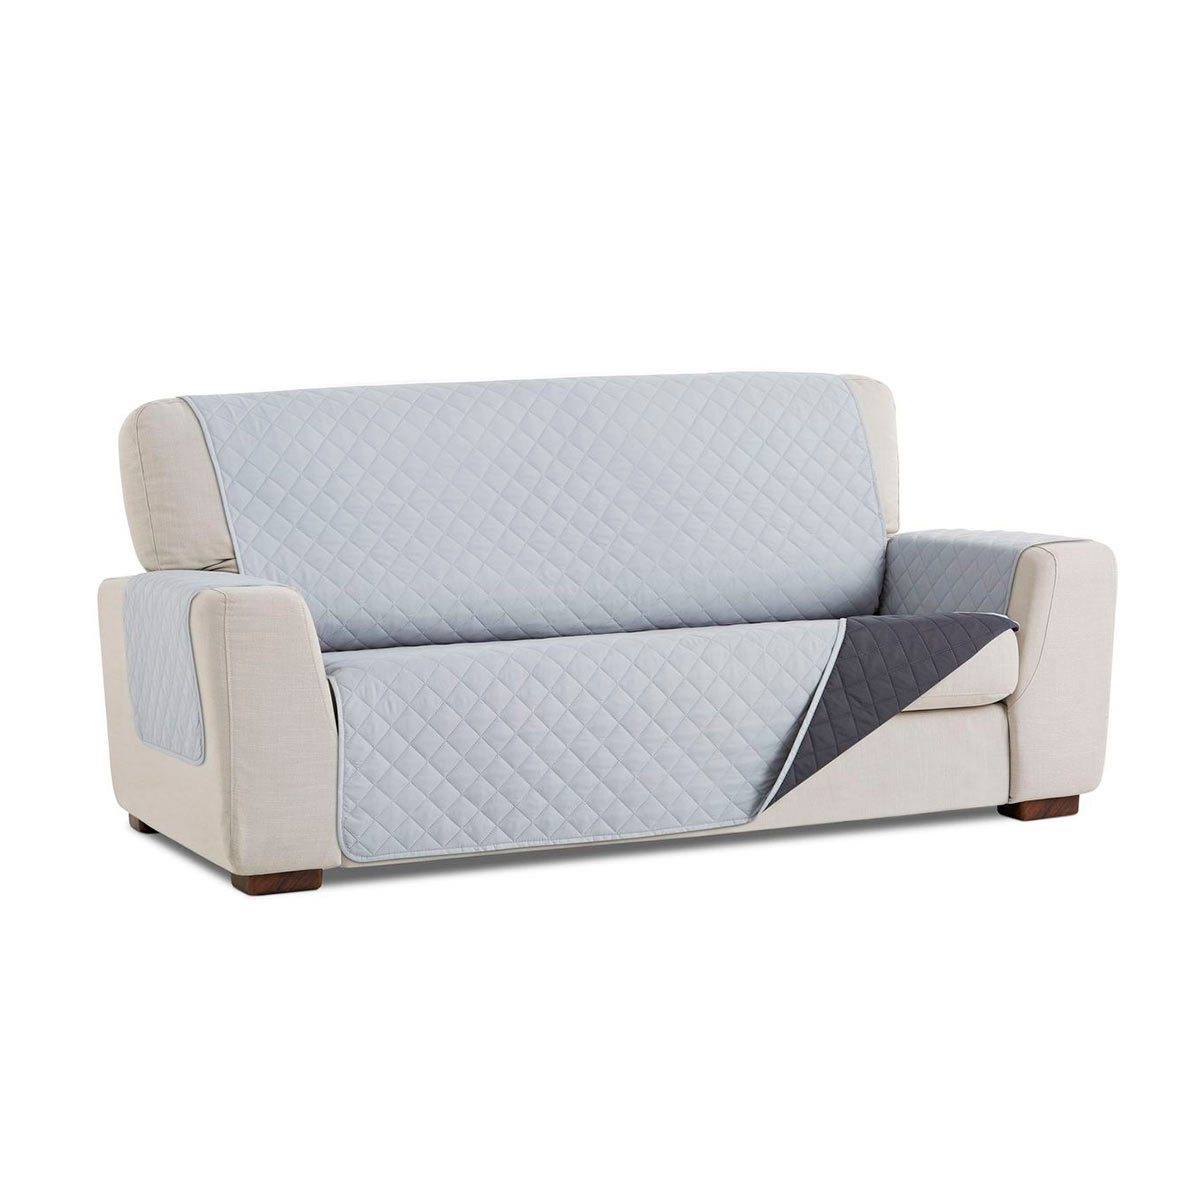 Cubre sofa Gris claro fondo blanco